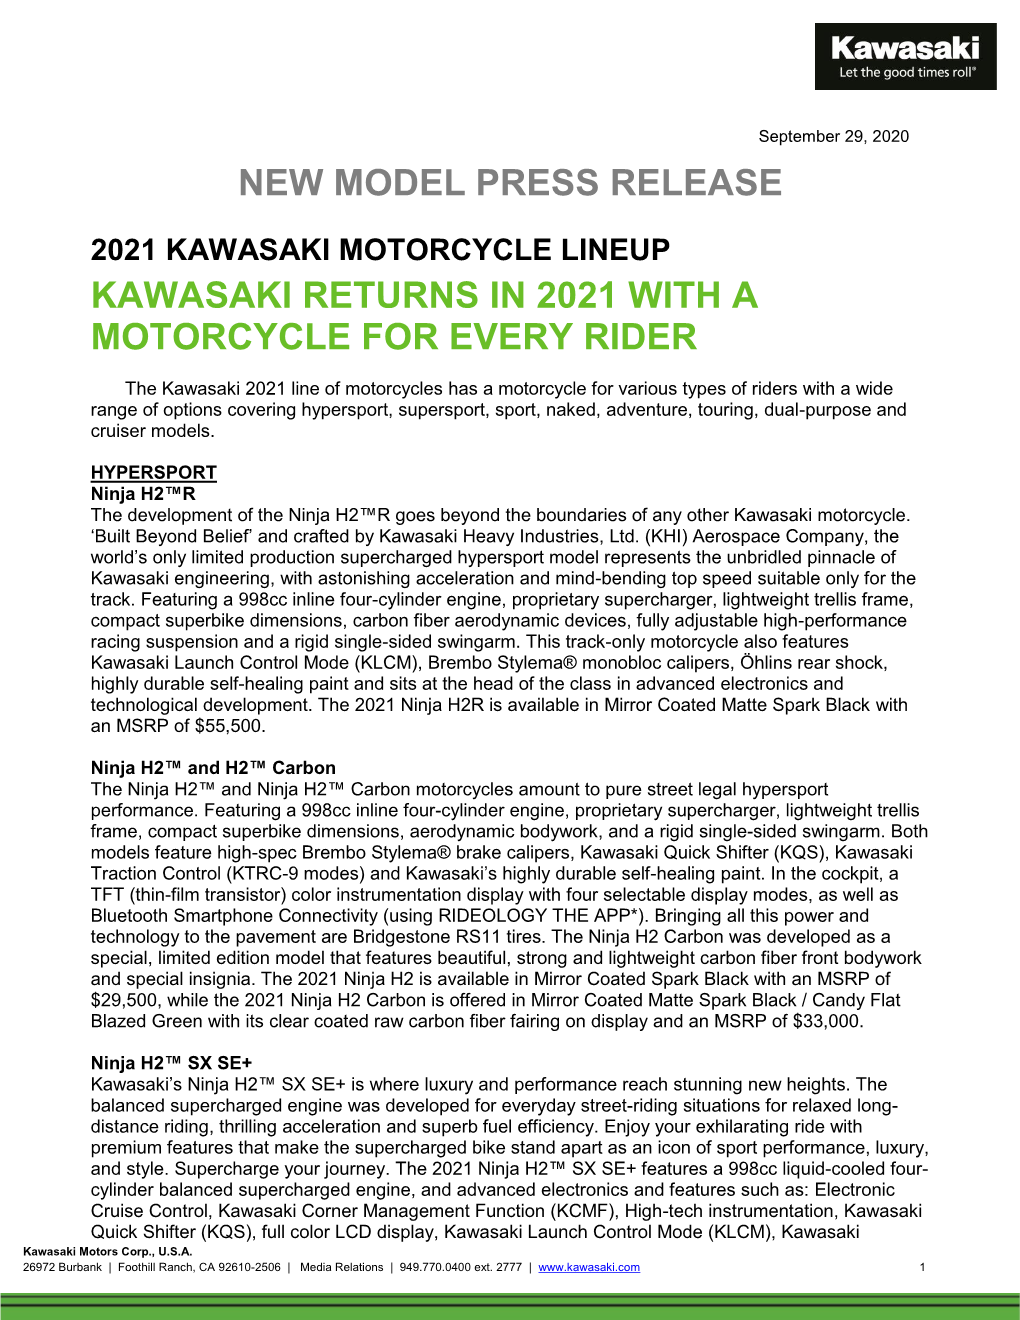 New Model Press Release Kawasaki Returns in 2021